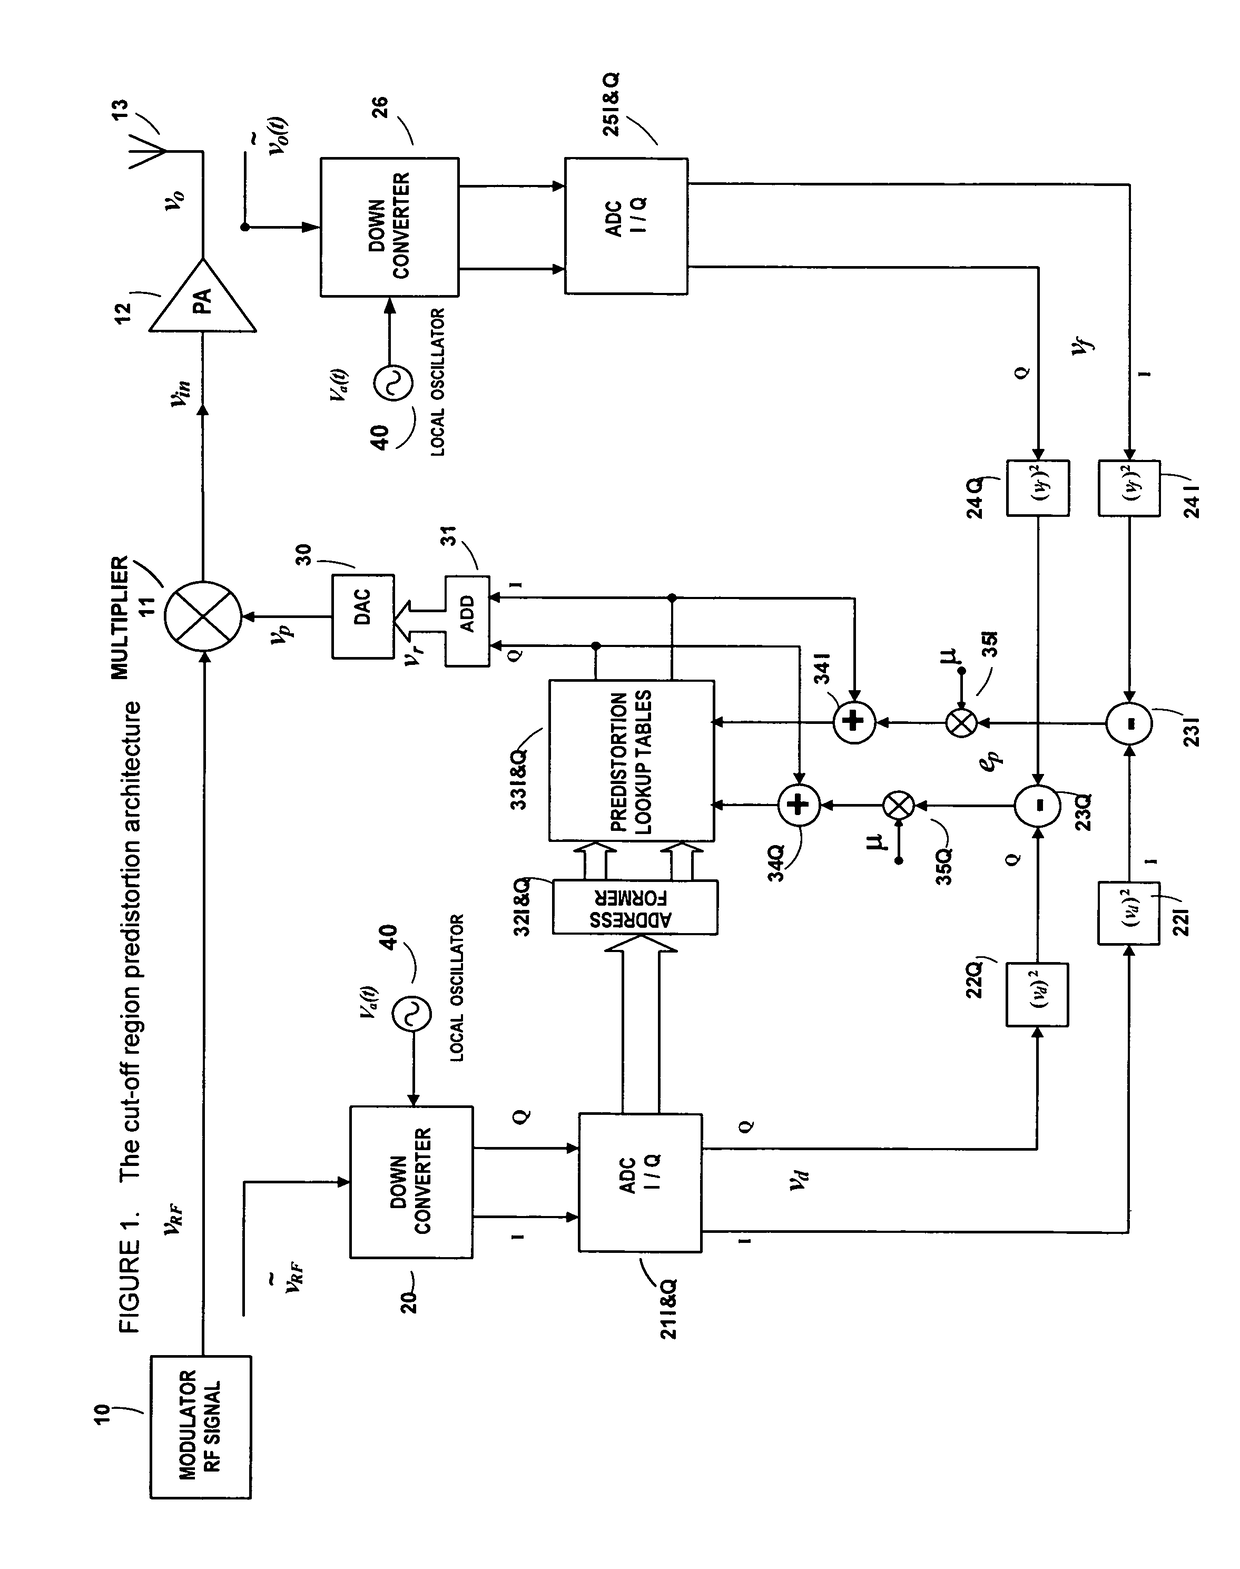 Power amplifier predistortion methods and apparatus